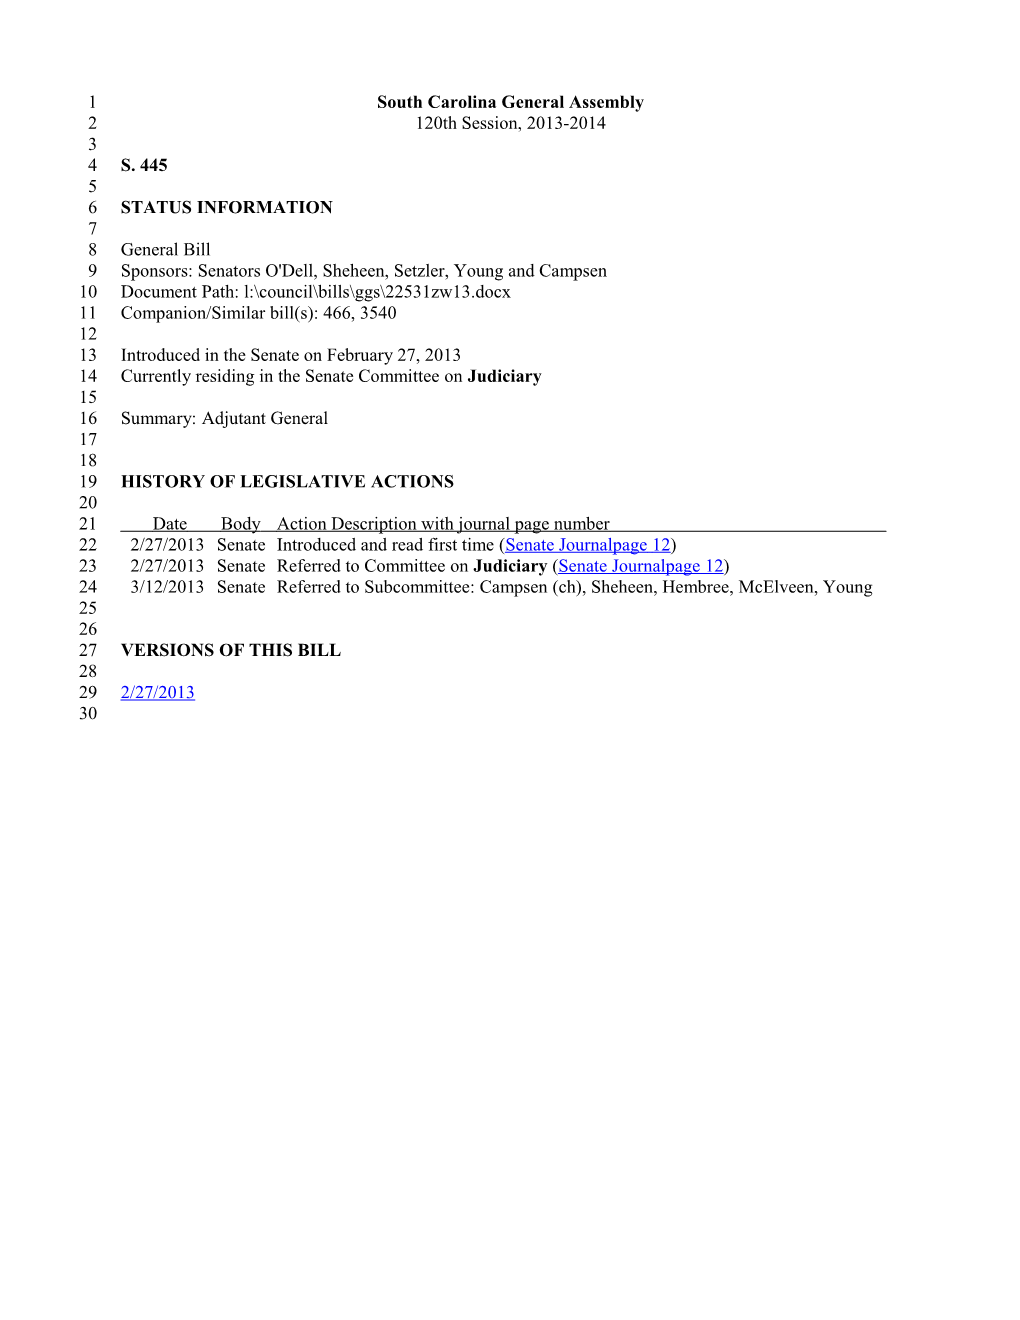 2013-2014 Bill 445: Adjutant General - South Carolina Legislature Online